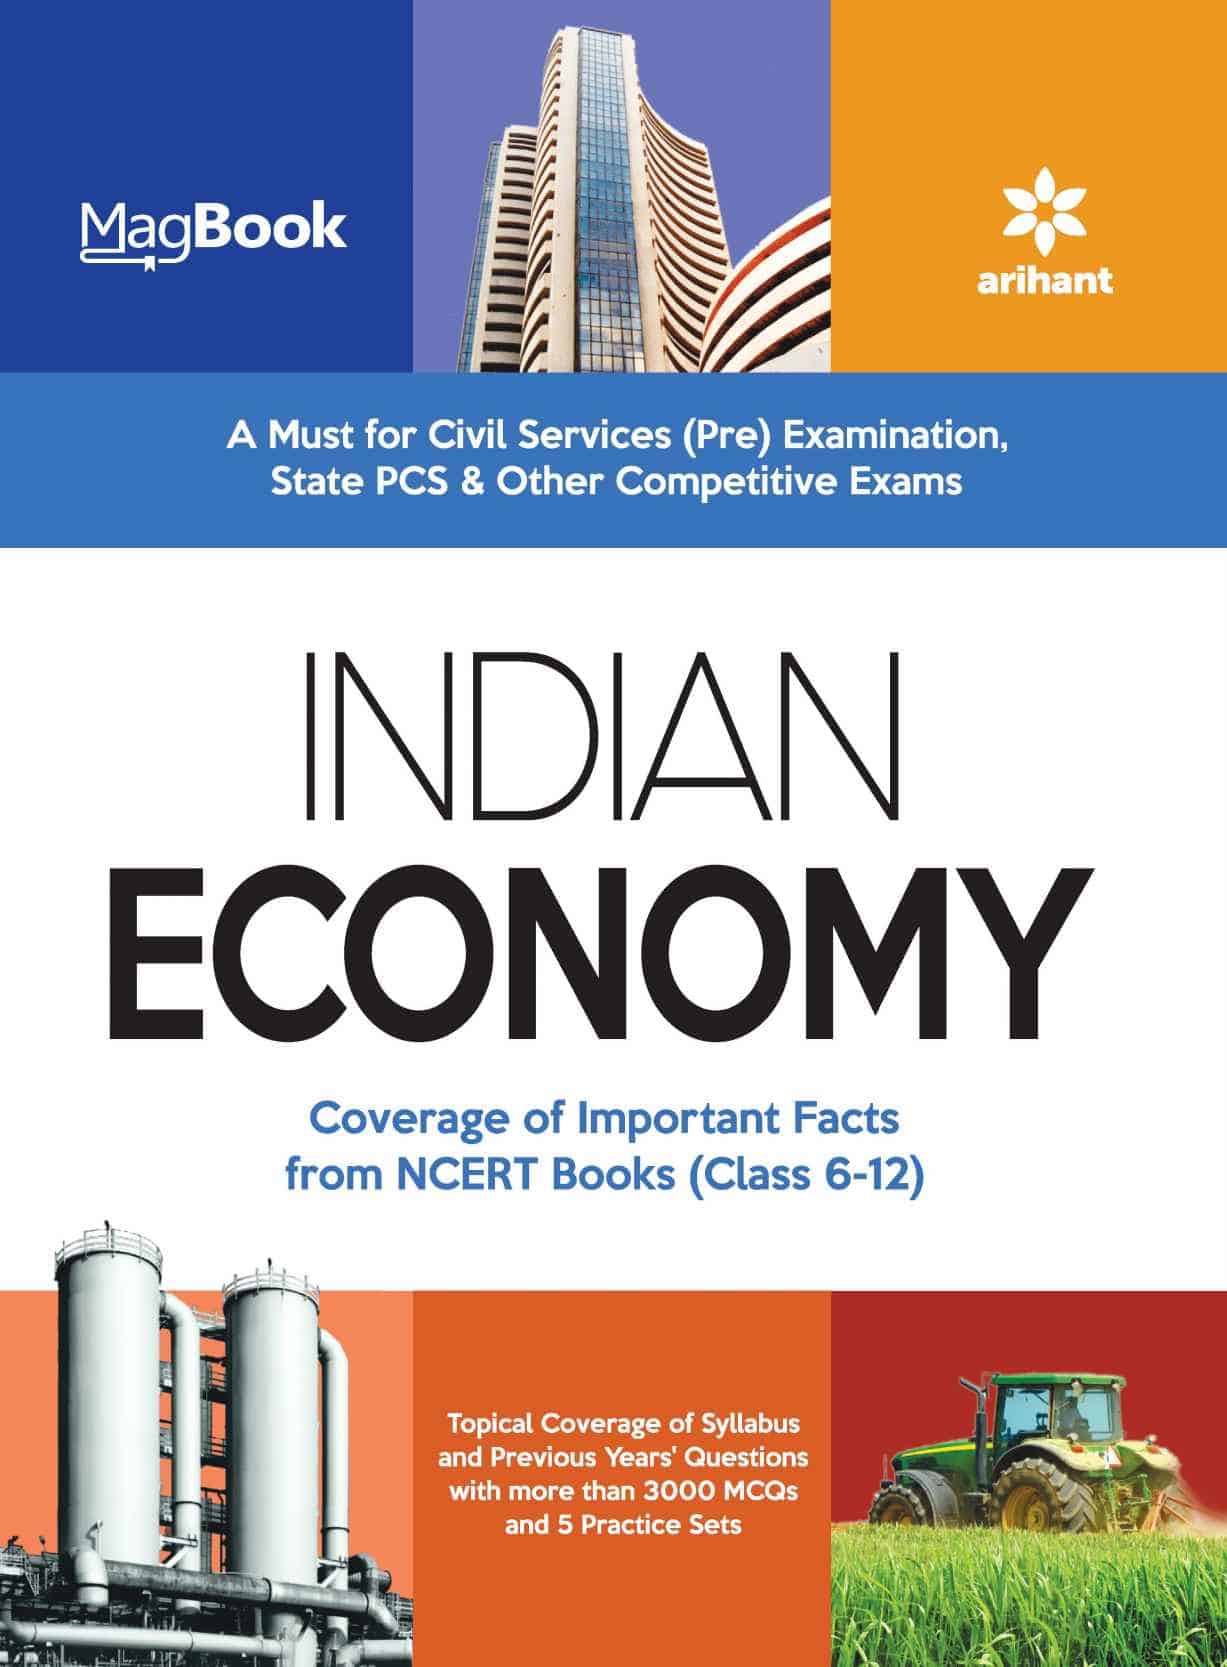 Arihant MagBook Indian Economy PDF [English Edition]